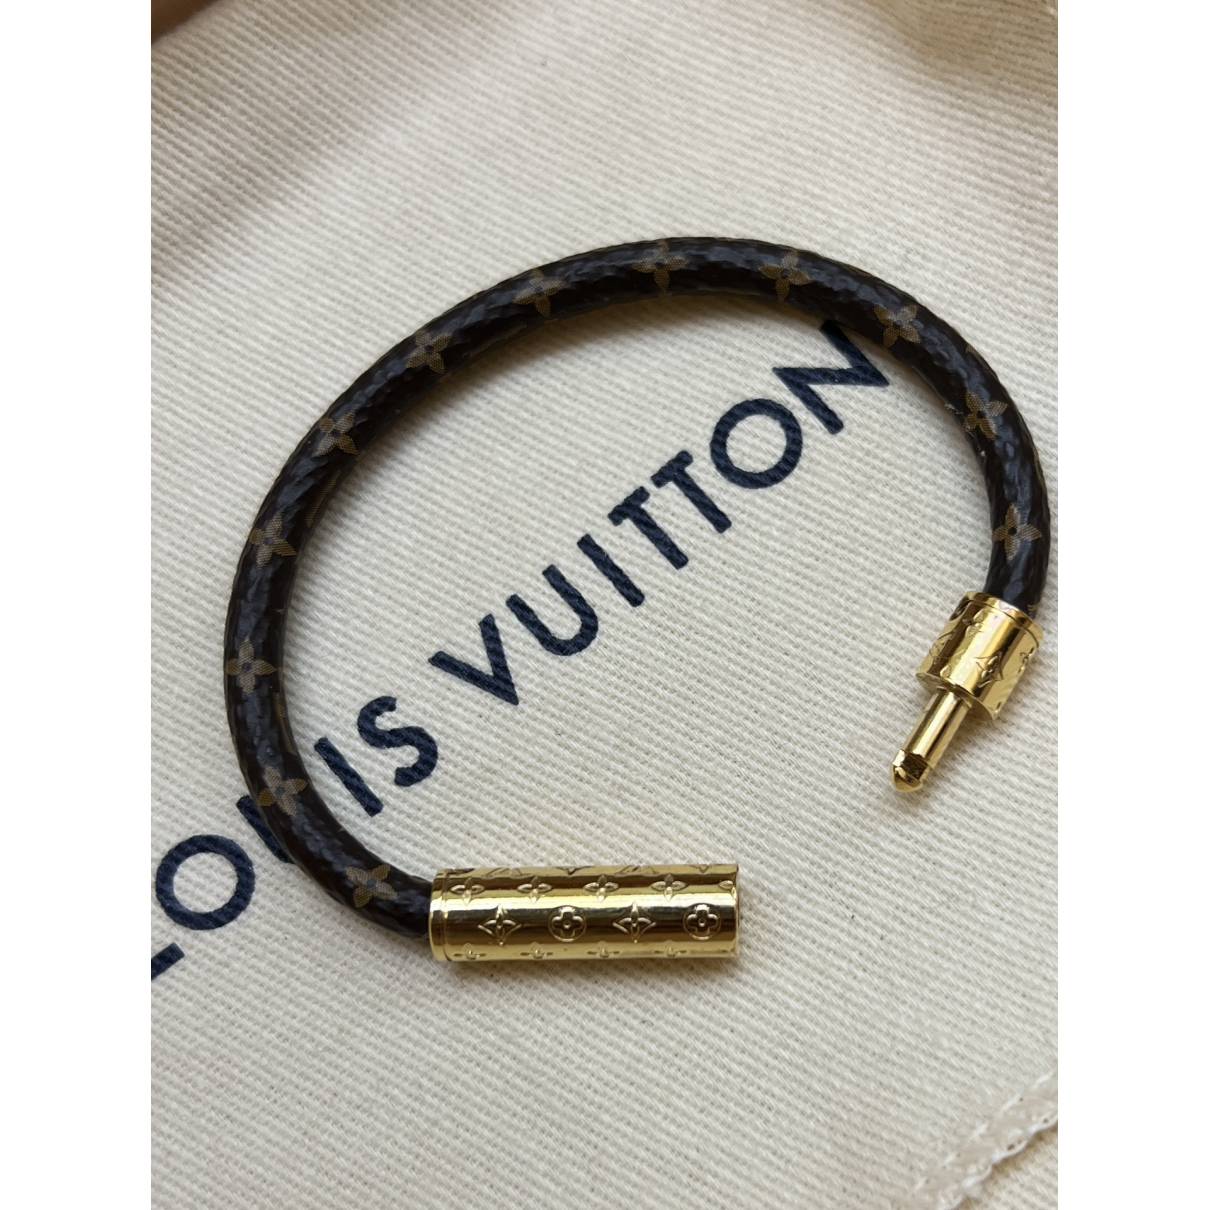 LV Confidential bracelet